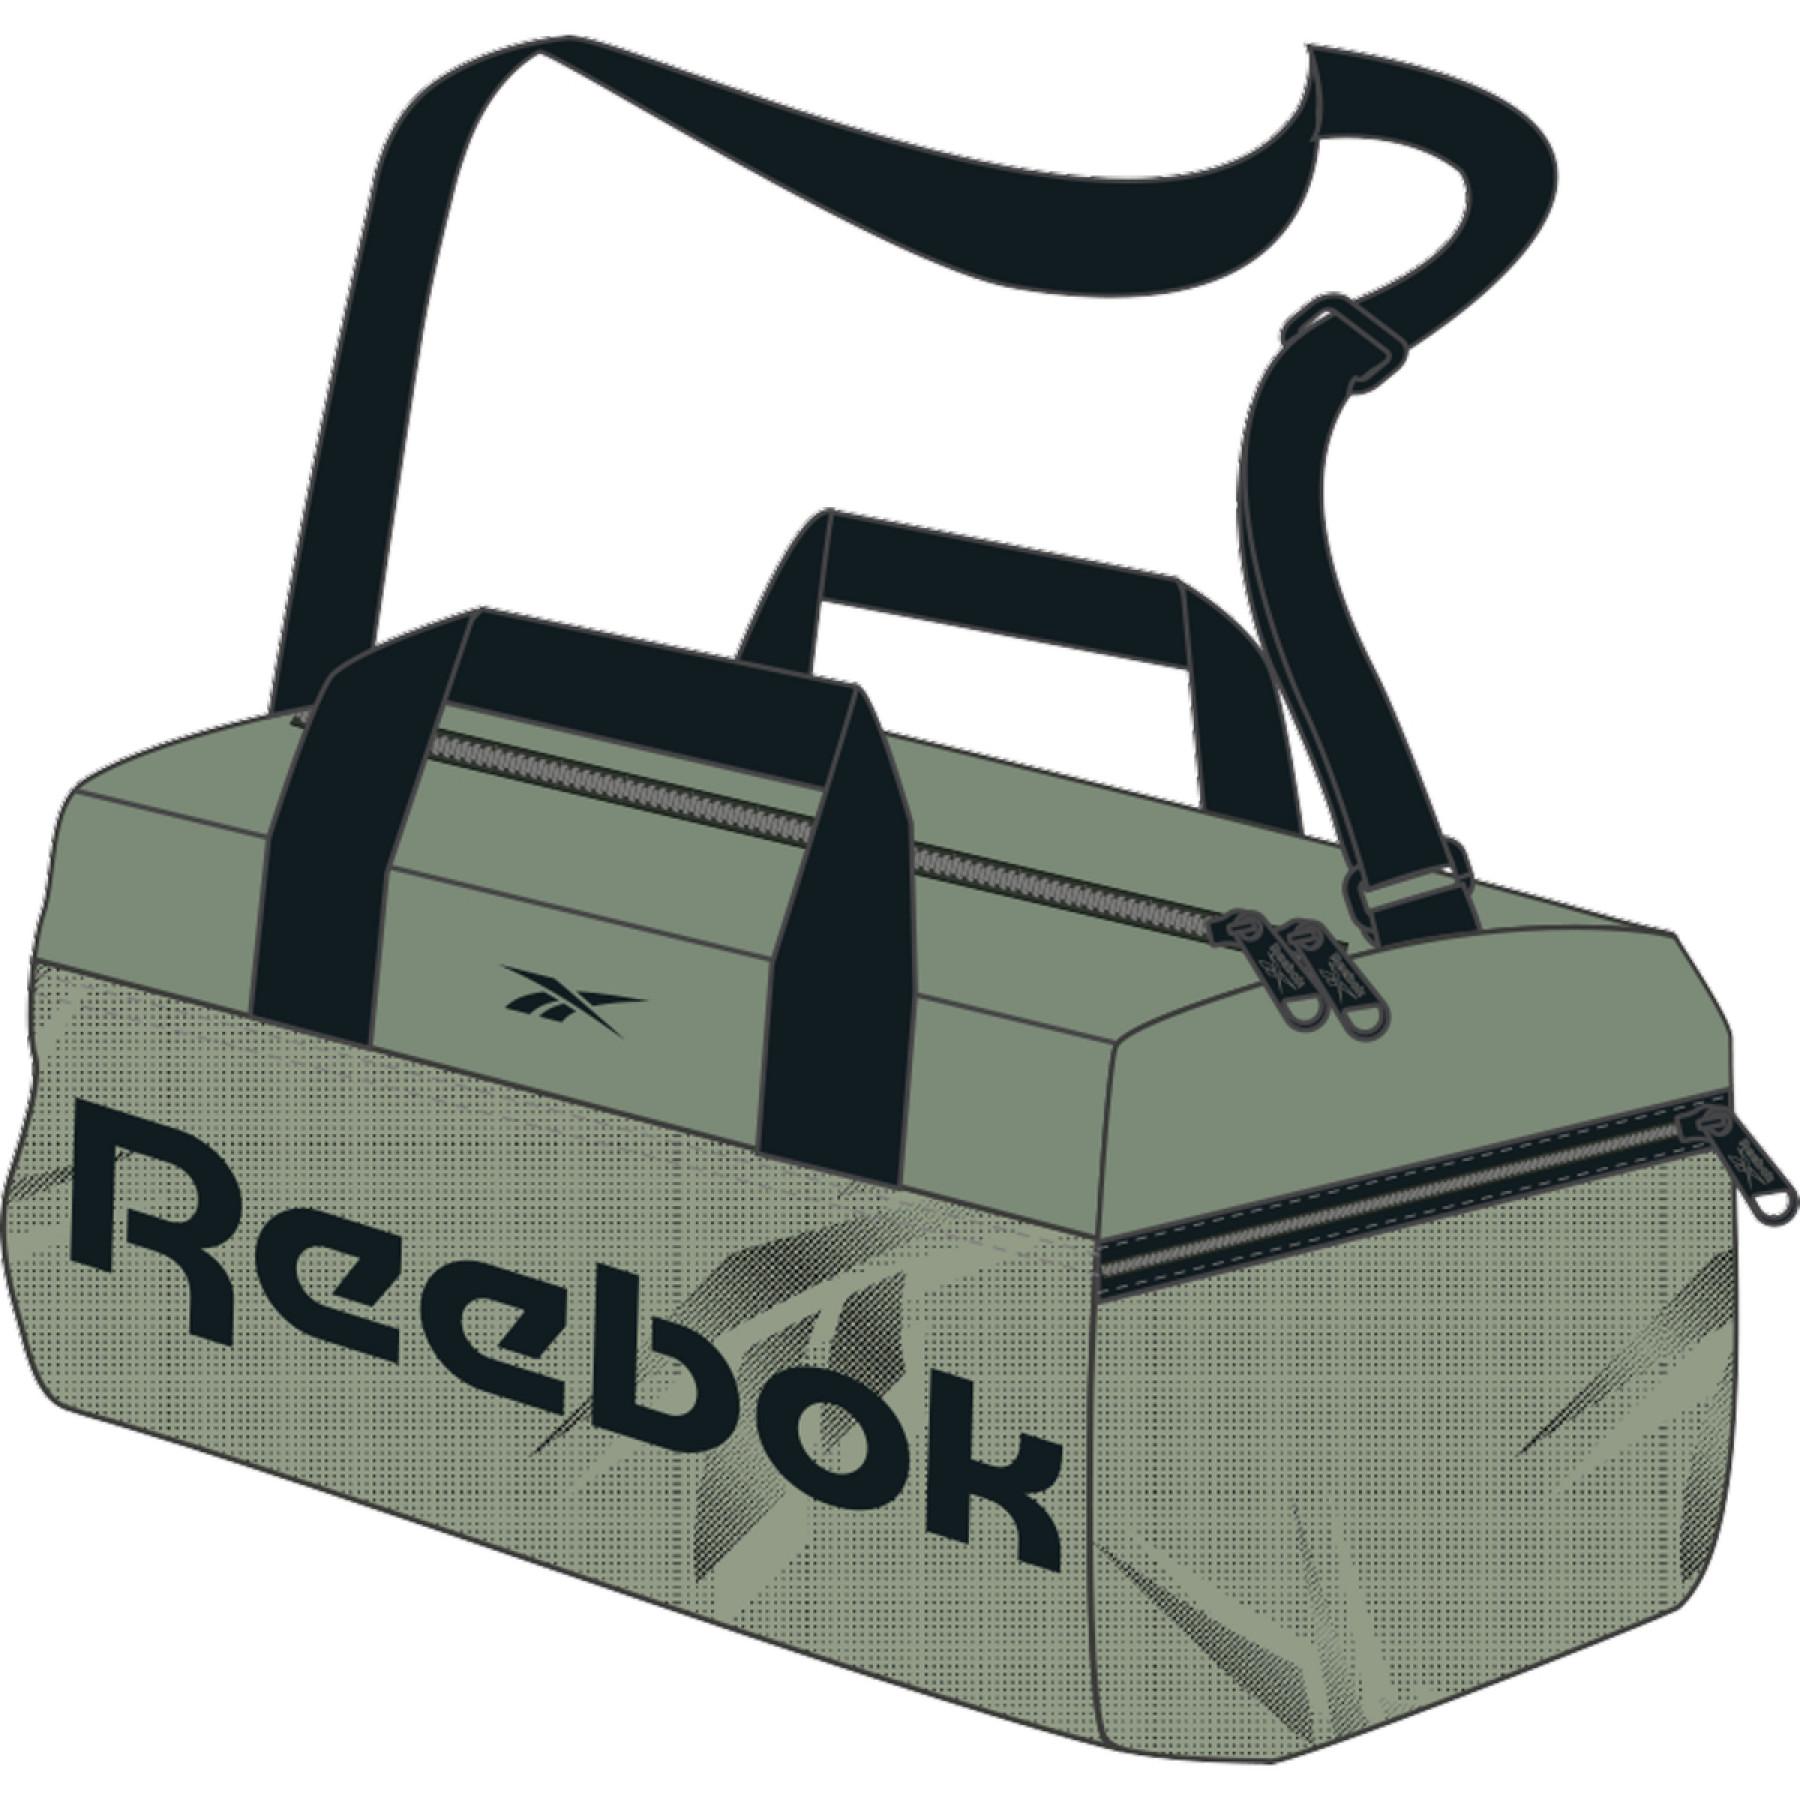 Sports bag Reebok Active Core Graphic Medium